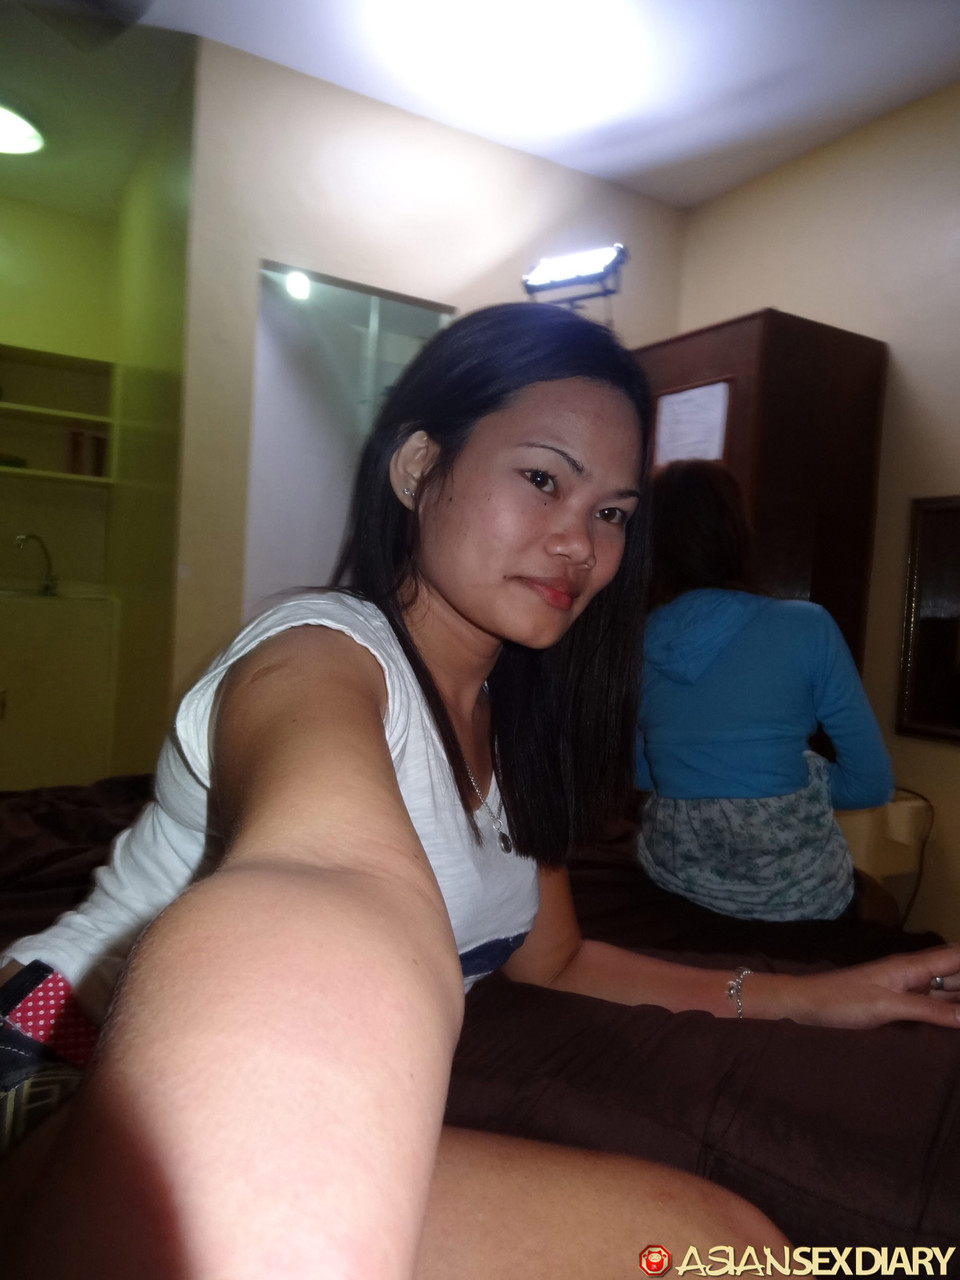 Horny Asian girls take selfies and fuck lucky tourist while enjoying free AC порно фото #422594962 | Asian Sex Diary Pics, Leann, Irish, Selfie, мобильное порно